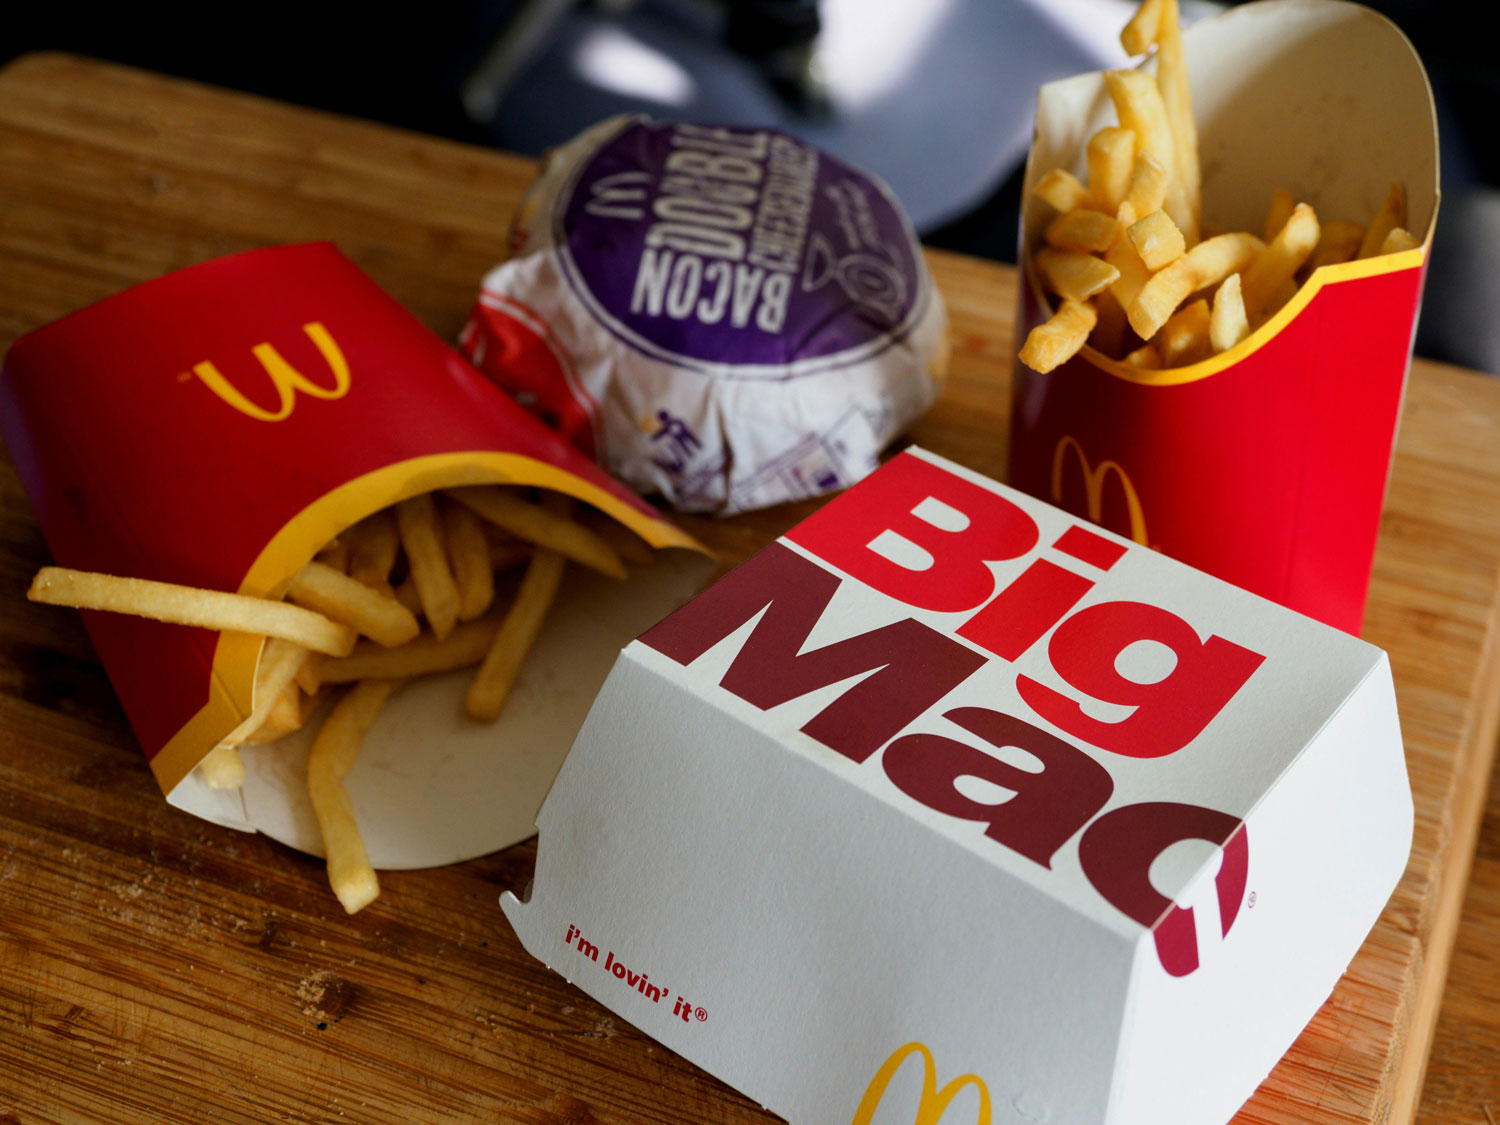 Big Mac EU trademark battle